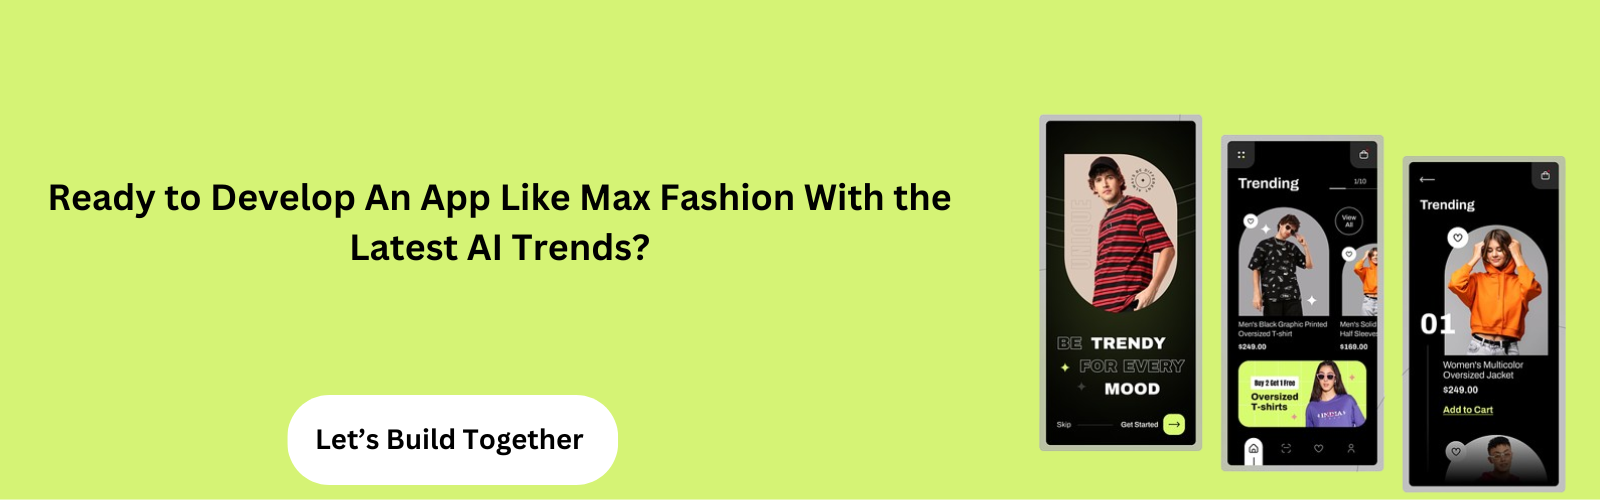 Develop an App Like Max Fashion